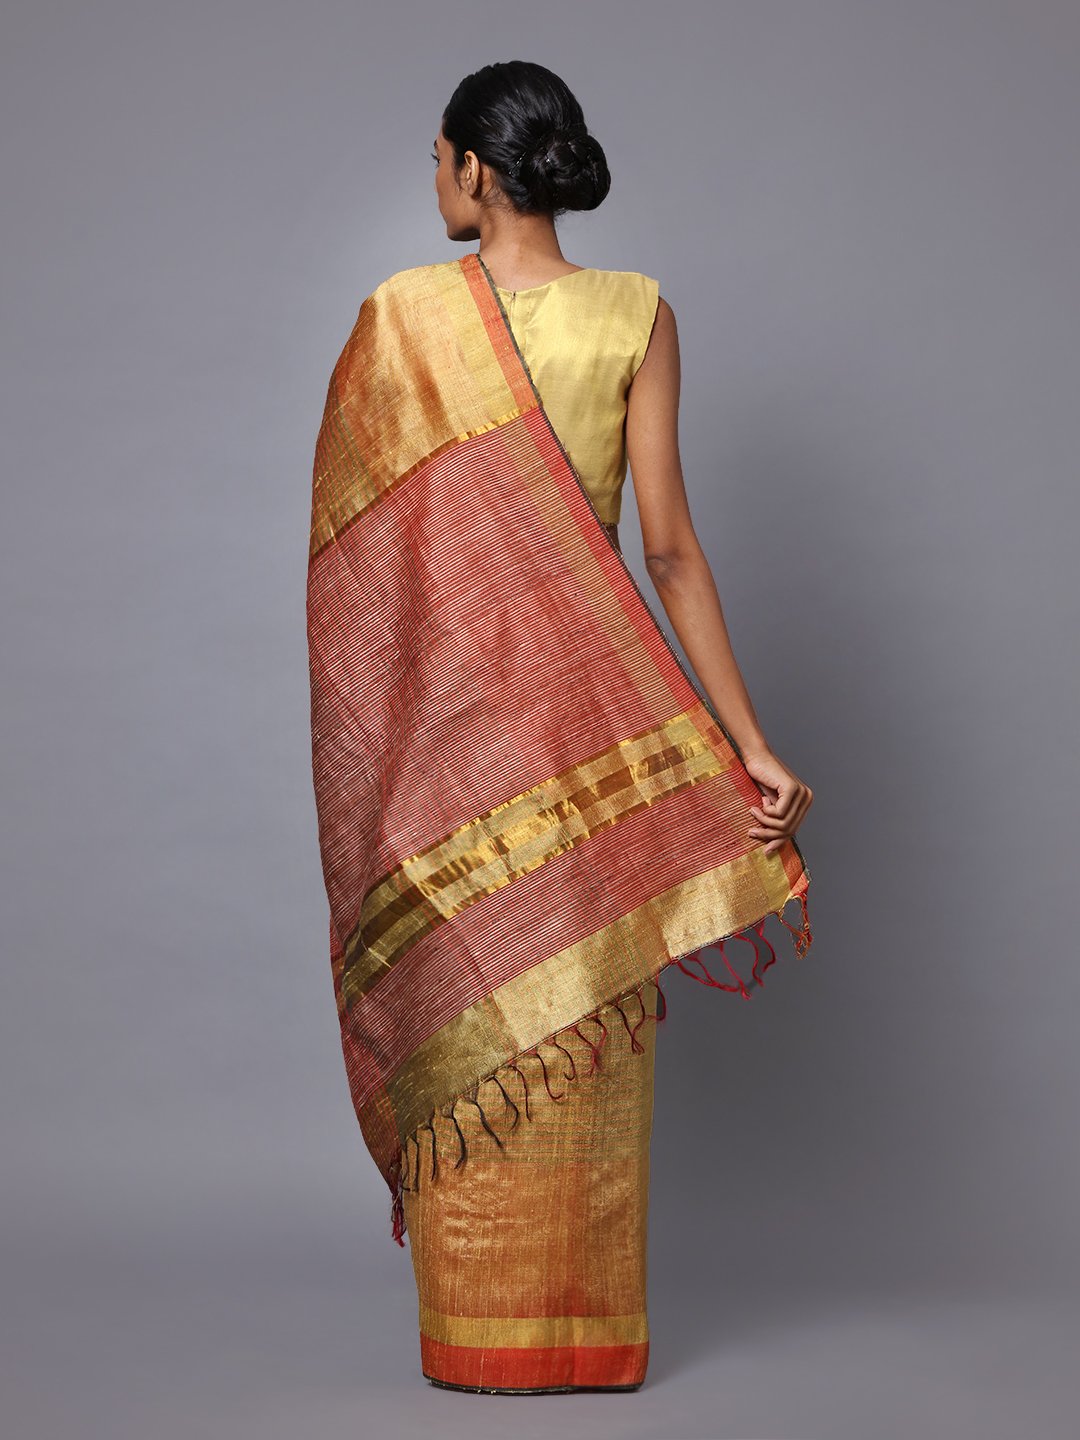 Bronze gold handloom tussar silk saree